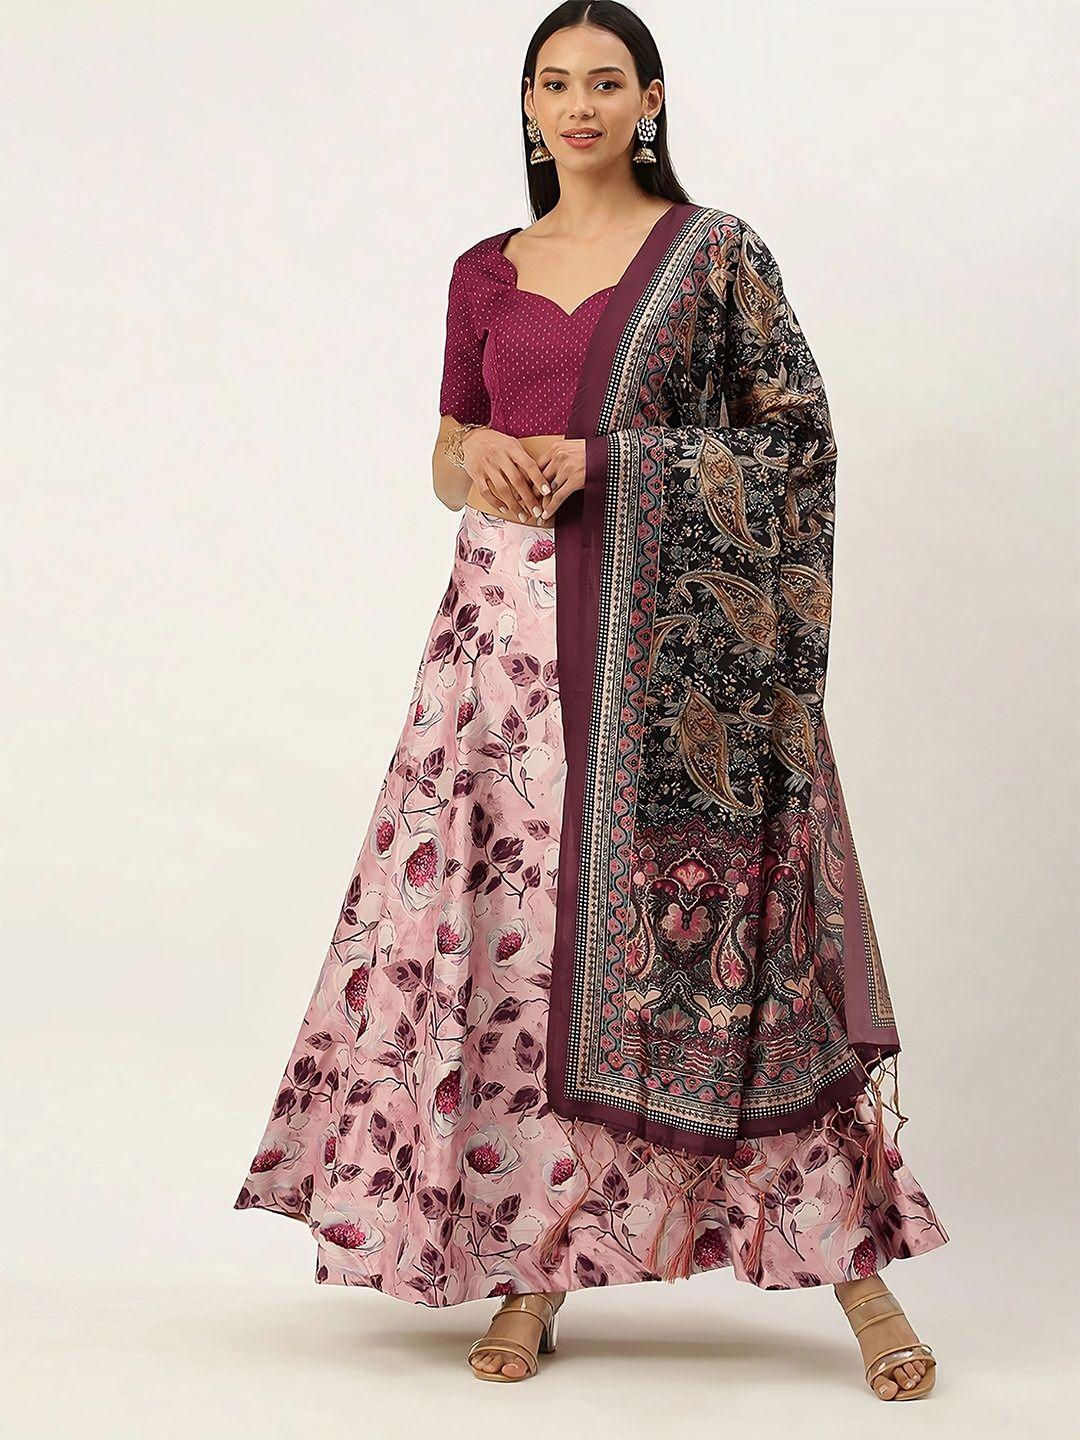 kaizen texo fab semi-stitched lehenga & unstitched blouse with dupatta